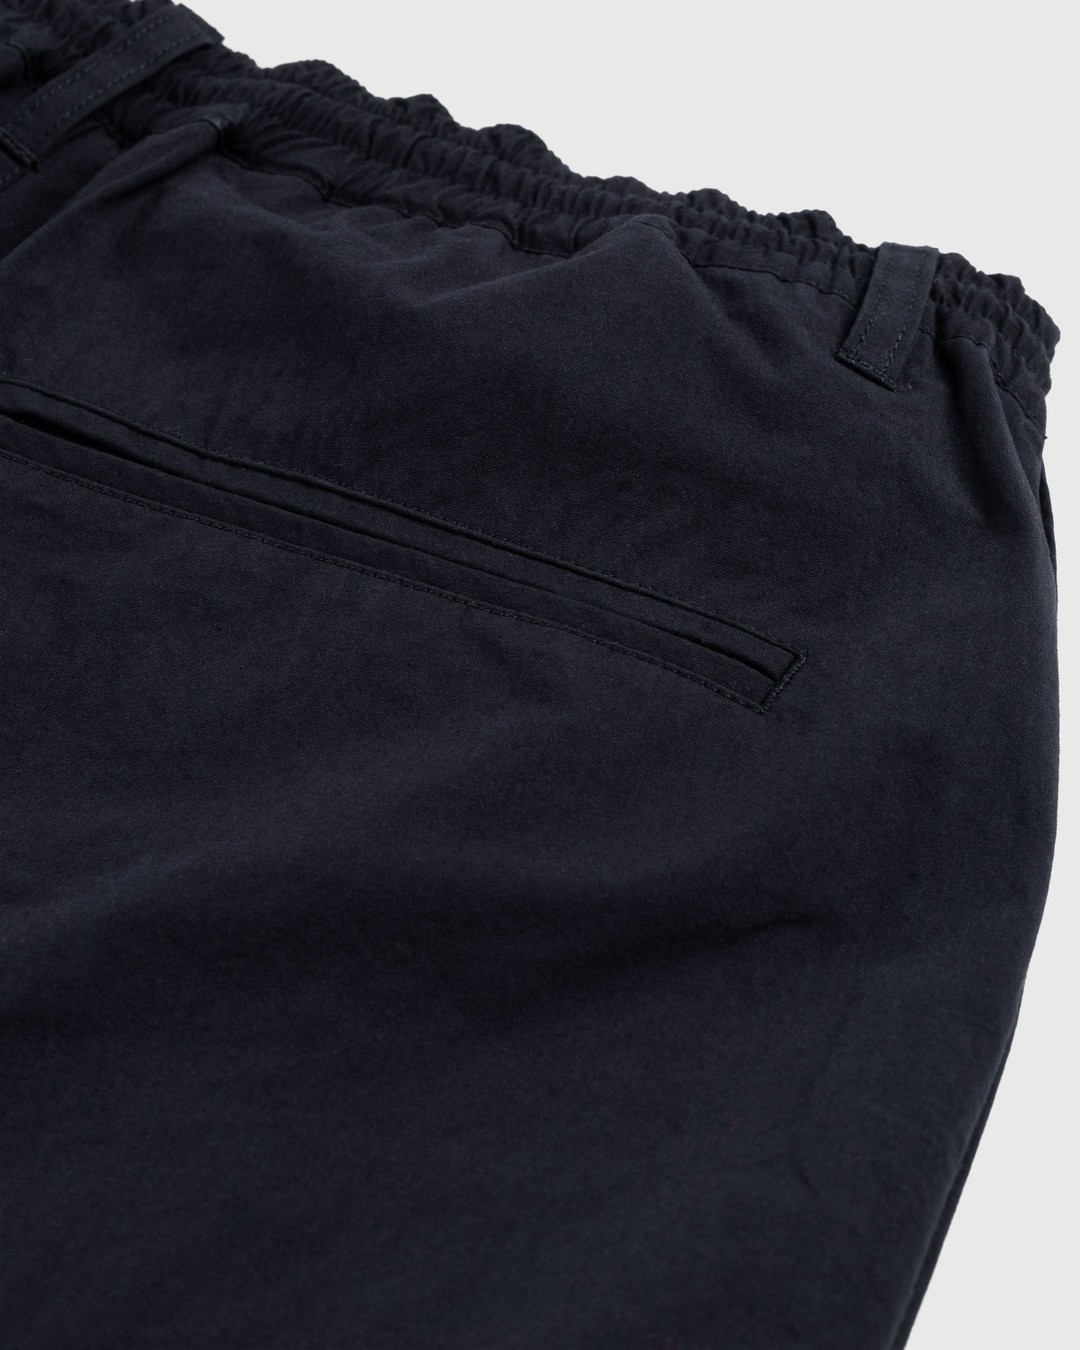 Highsnobiety HS05 – Reverse Piping Elastic Trouser Black - Pants - Black - Image 7